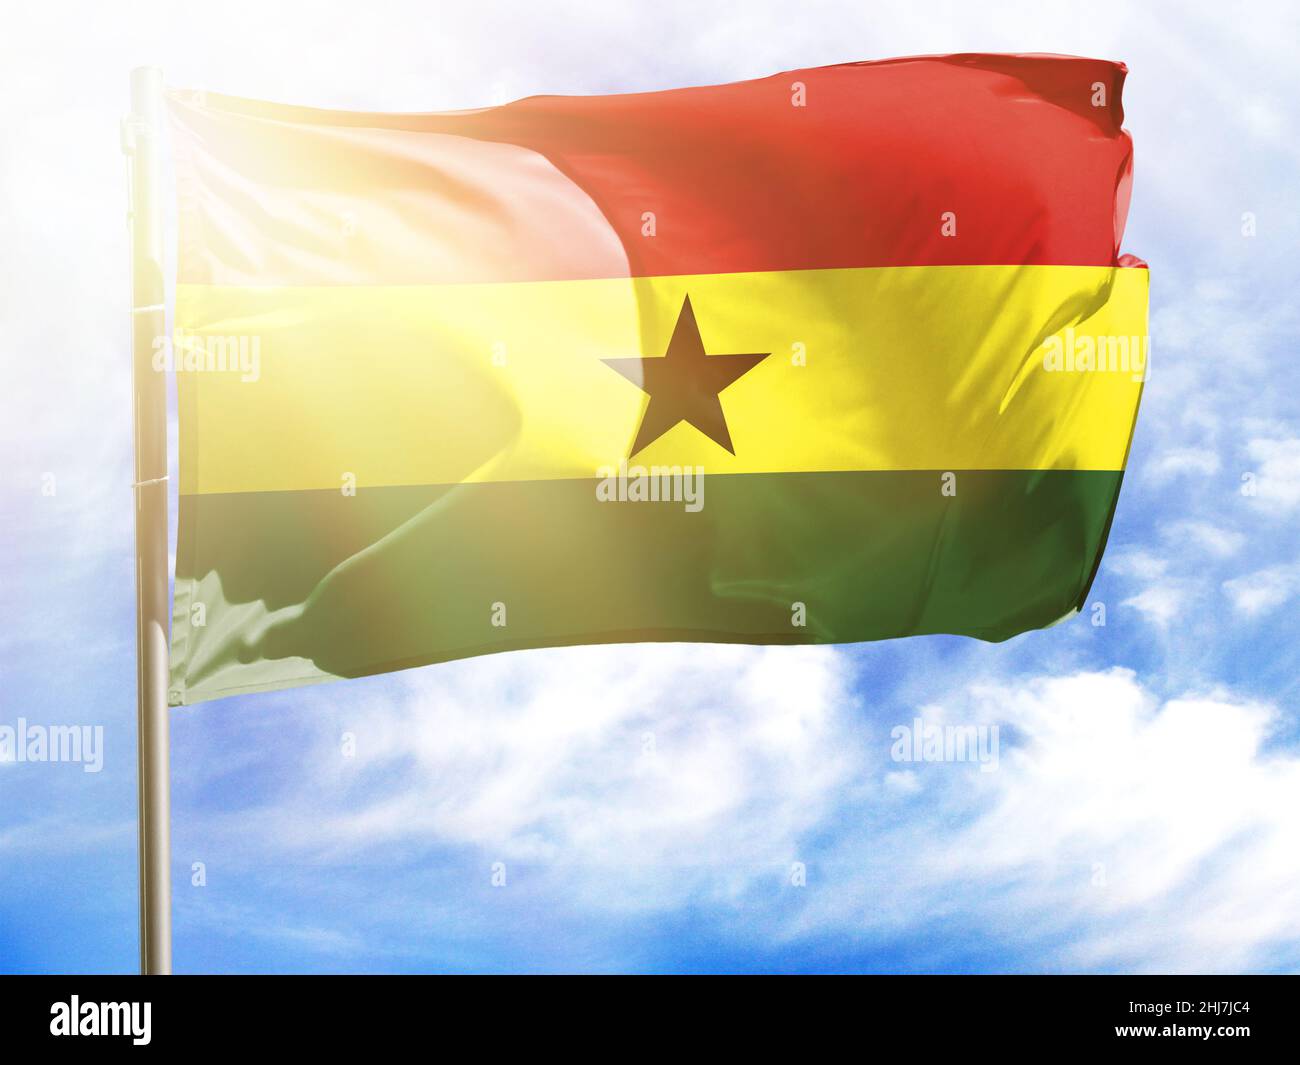 Flagpole with flag of Ghana. Stock Photo